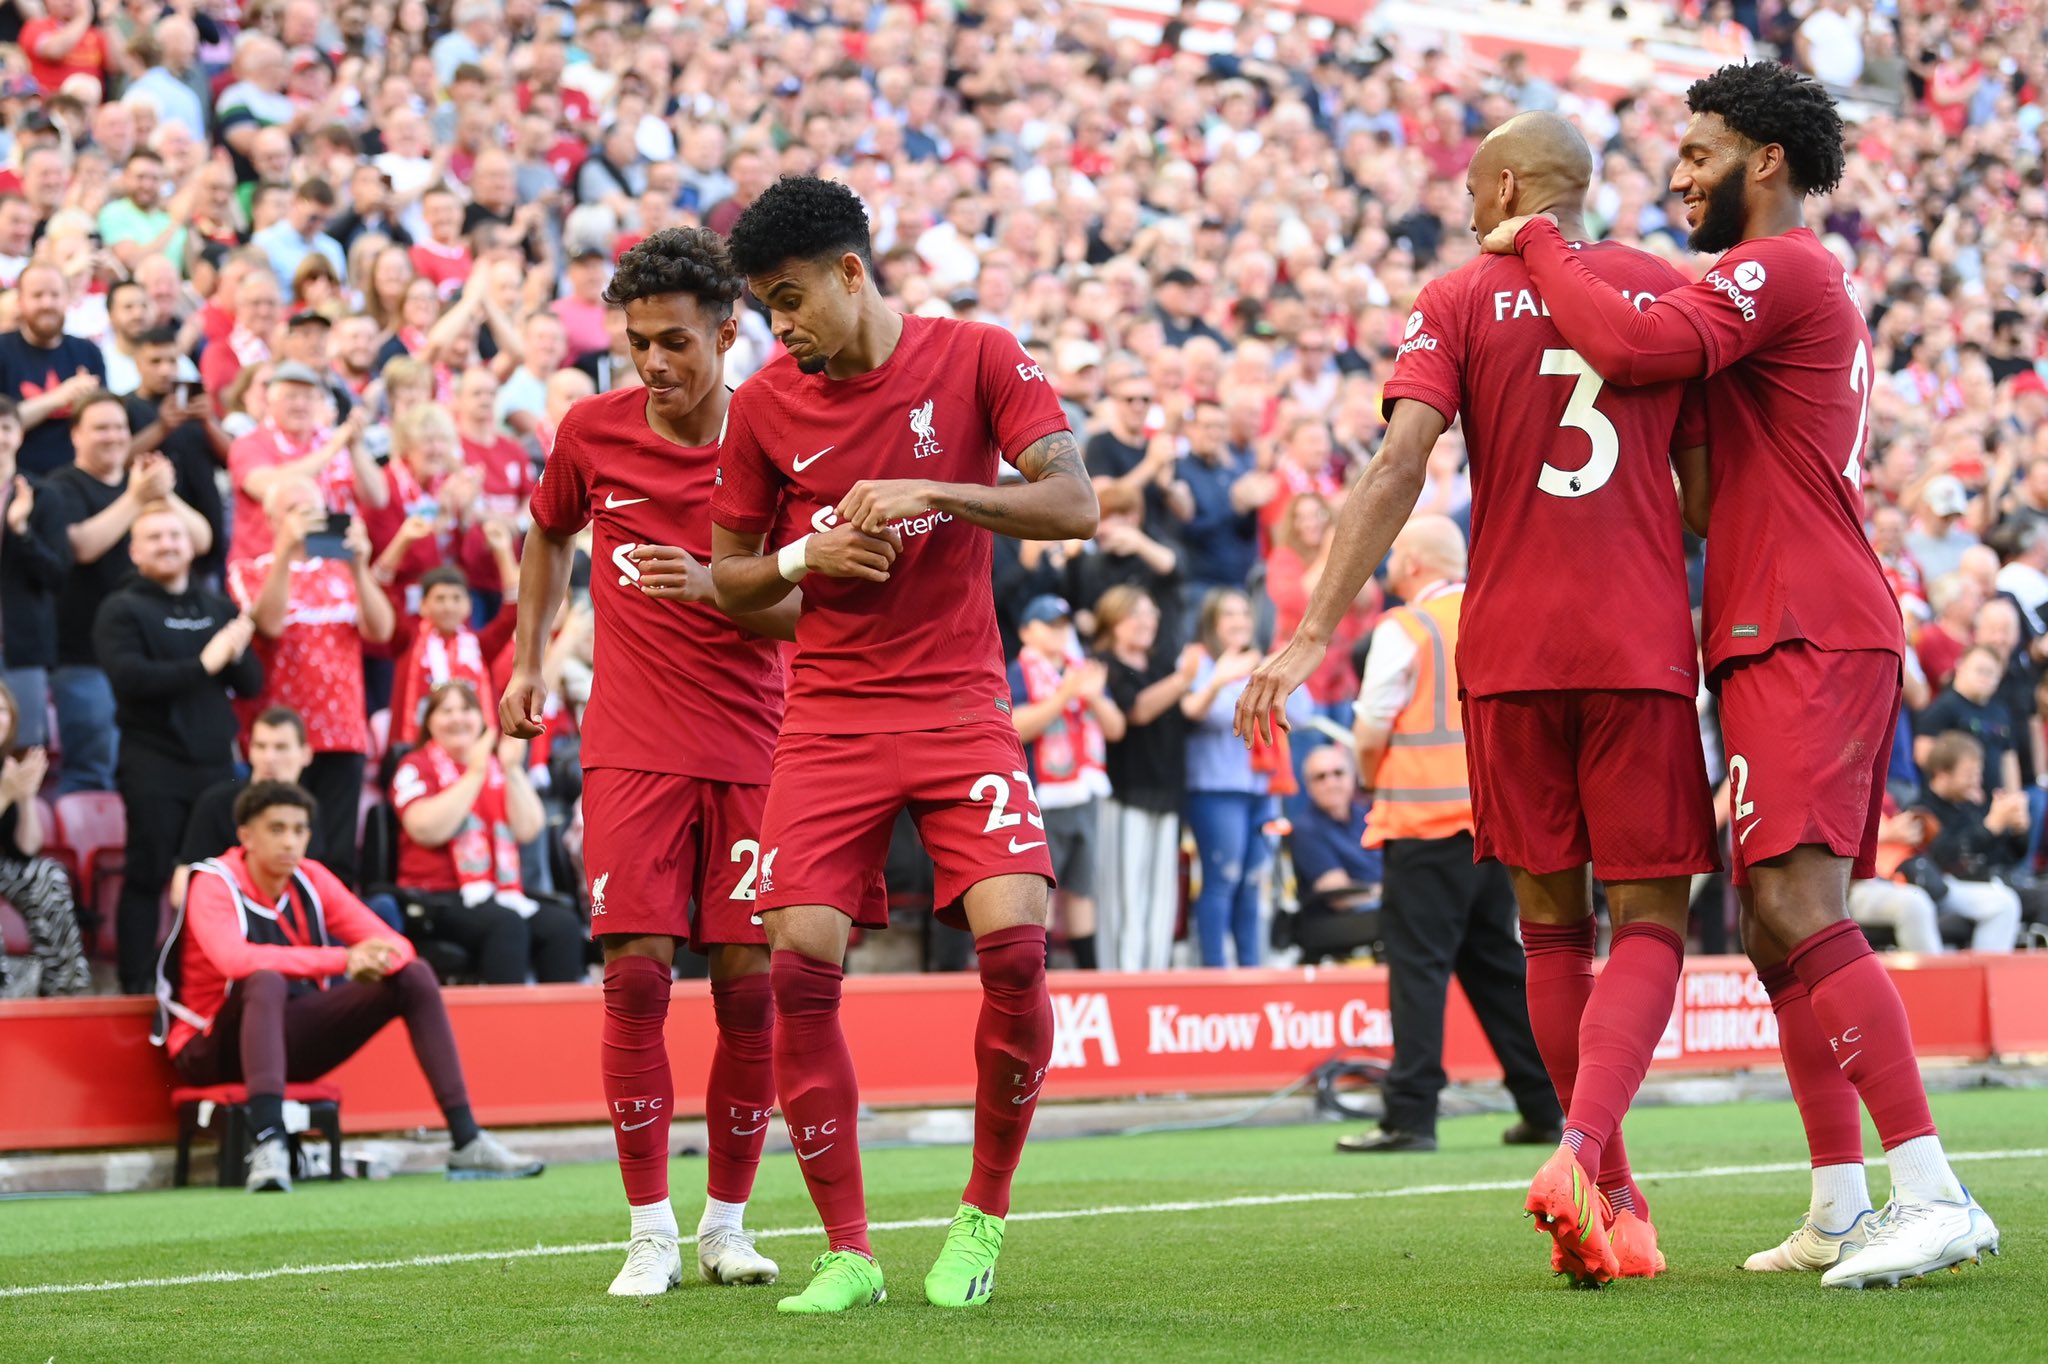 Liverpool 9 - 0 Bournemouth